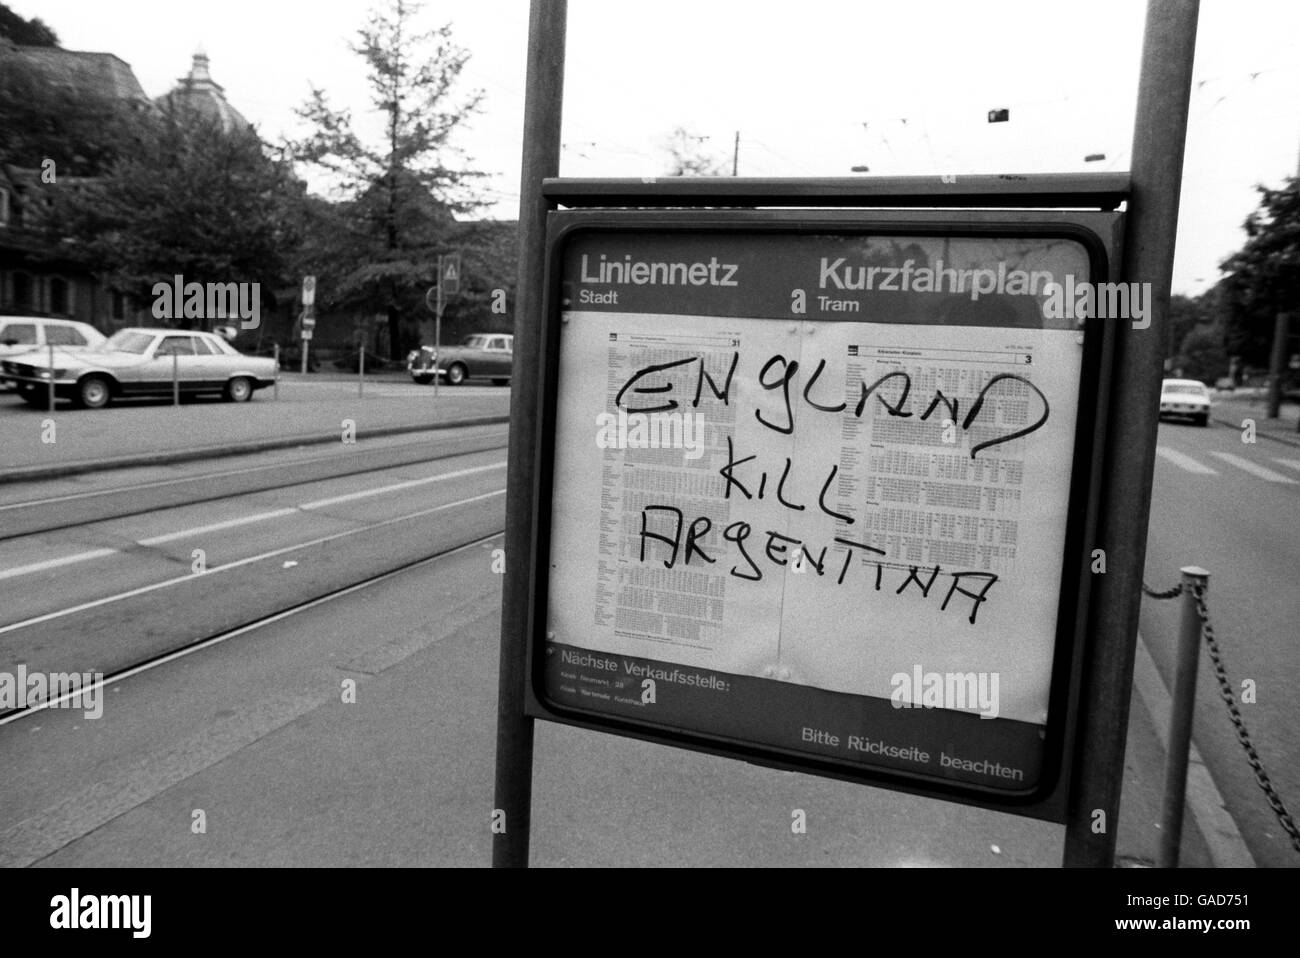 Falklands War-inspired graffiti on a public transport information sign near FIFA Headquarters in Zurich, Switzerland Stock Photo